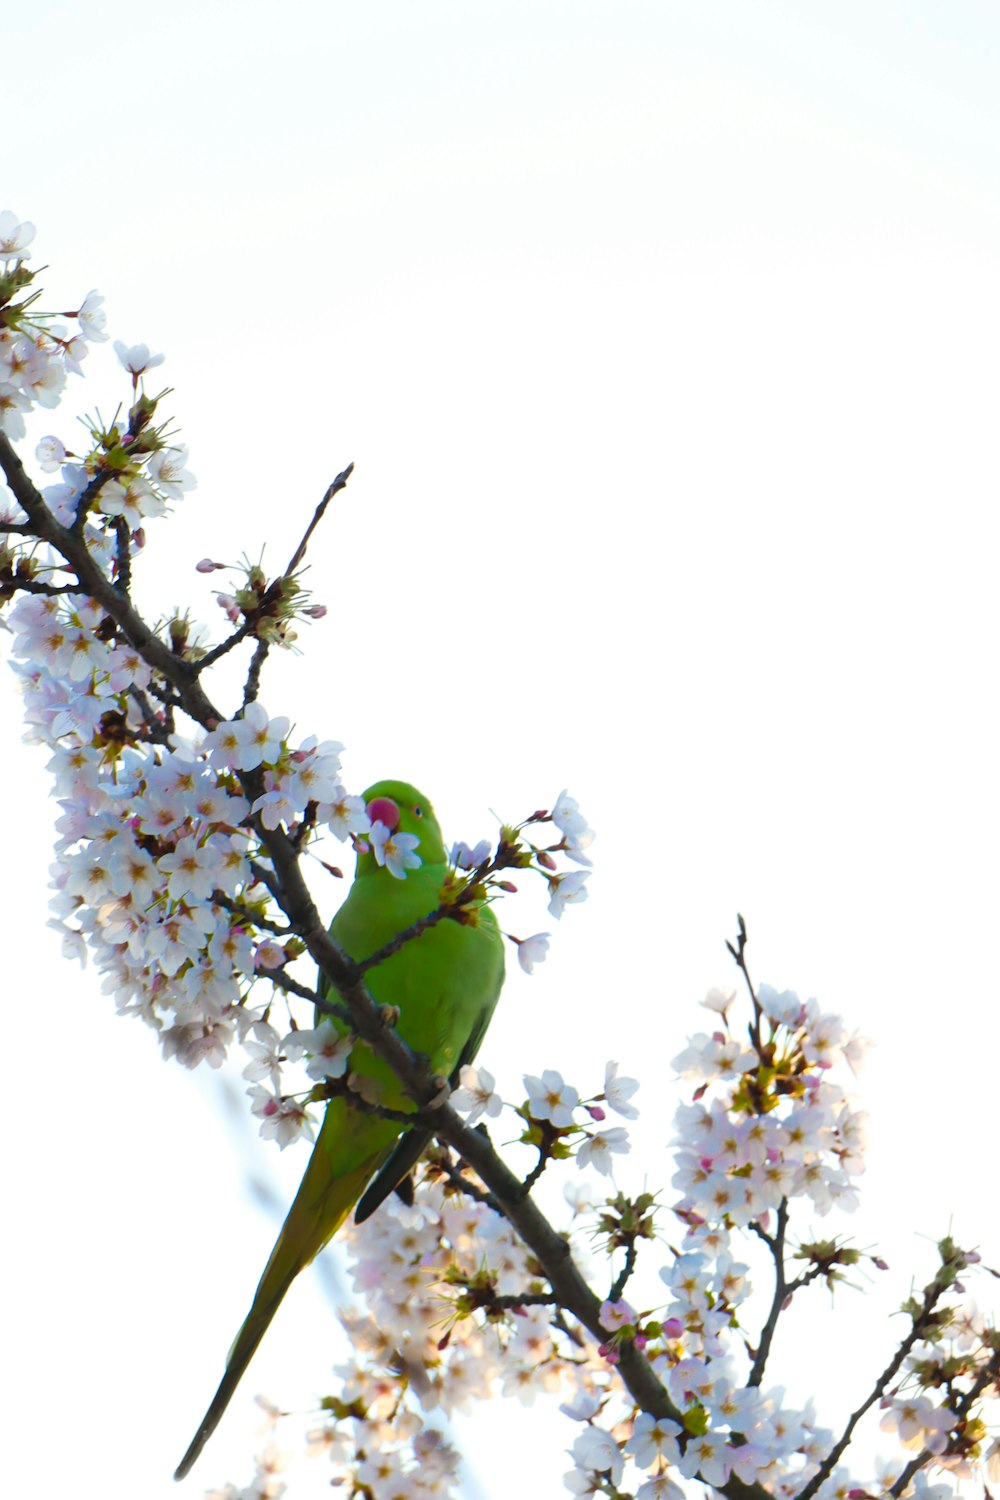 green bird on tree branch